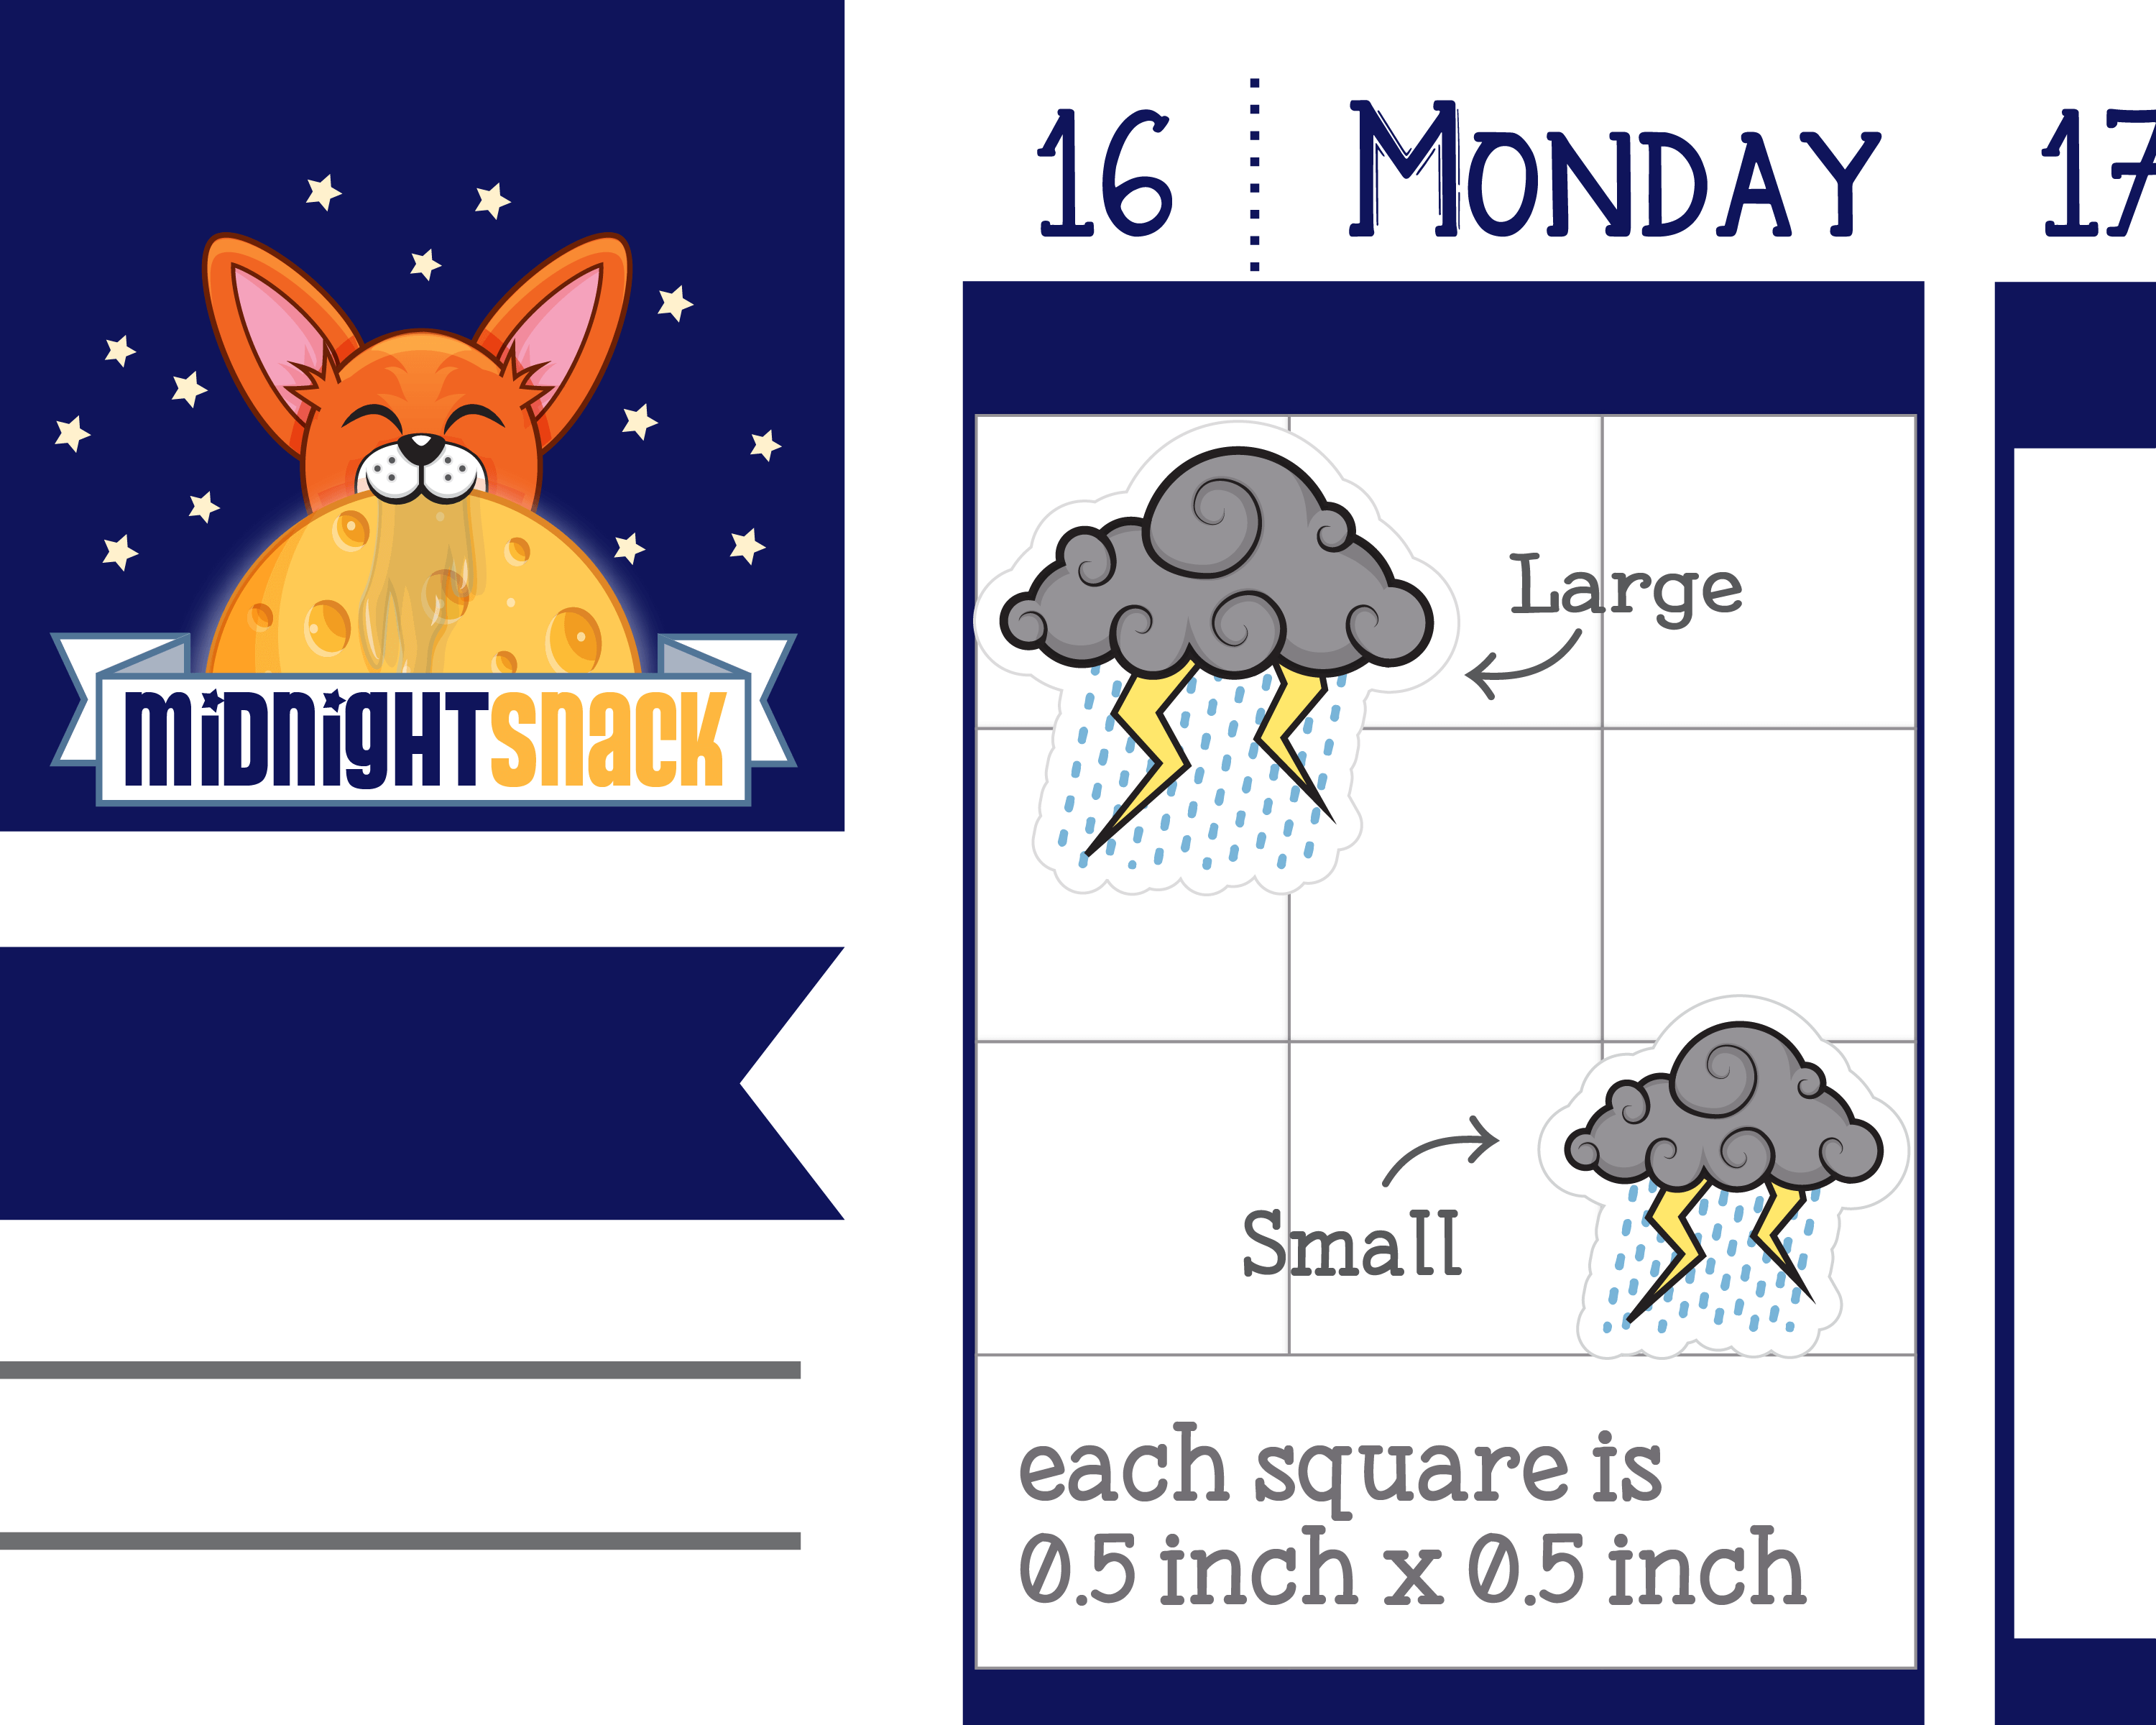 Thunderstorm Icon: Weather Planner Stickers Midnight Snack Planner